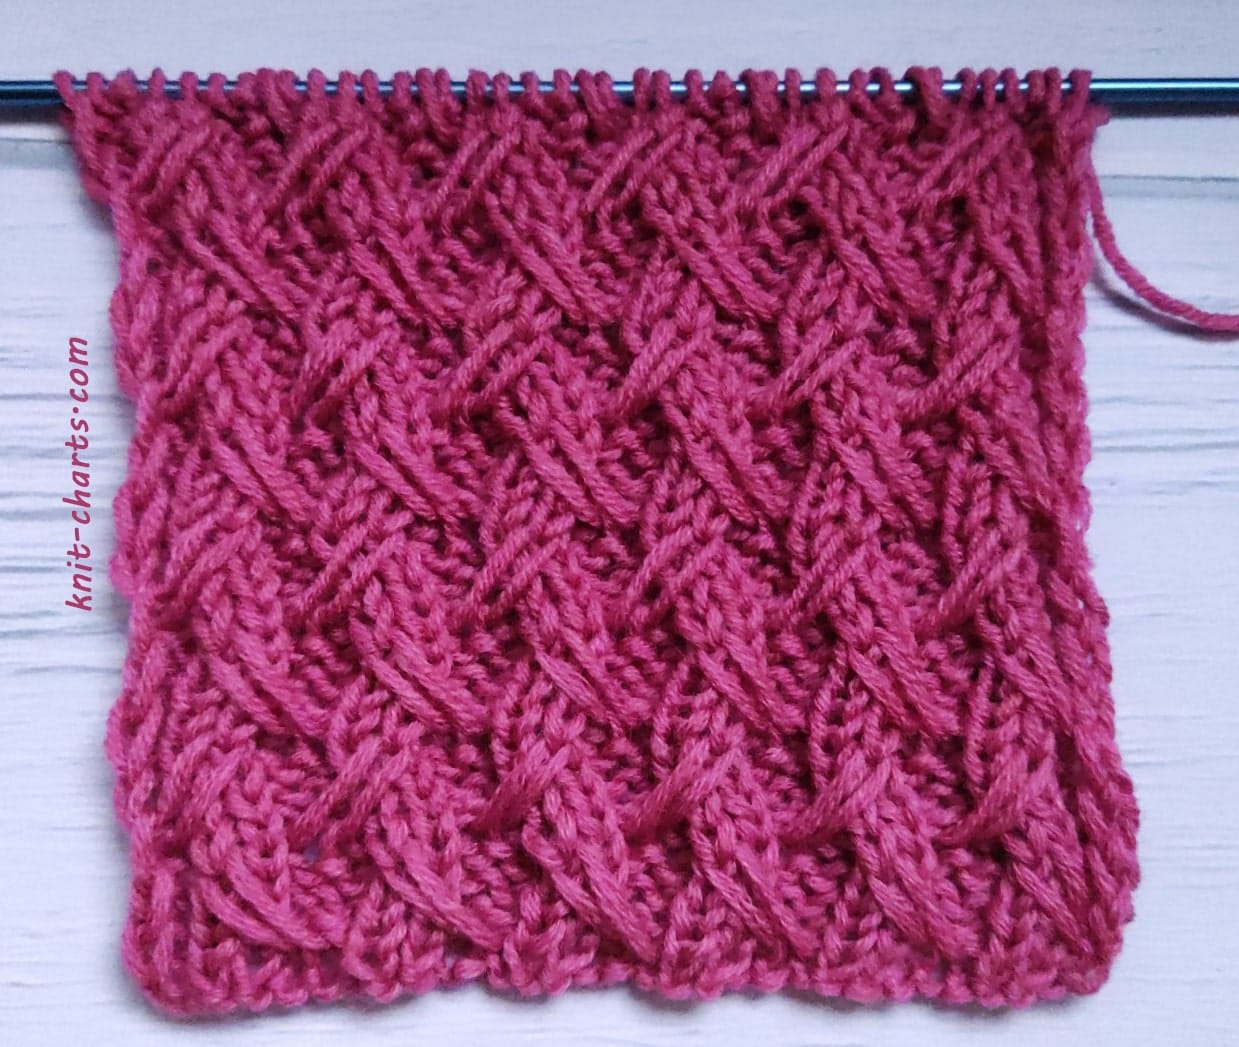 Free Knitting Patterns - Fancy Knitting Pattern with long loop